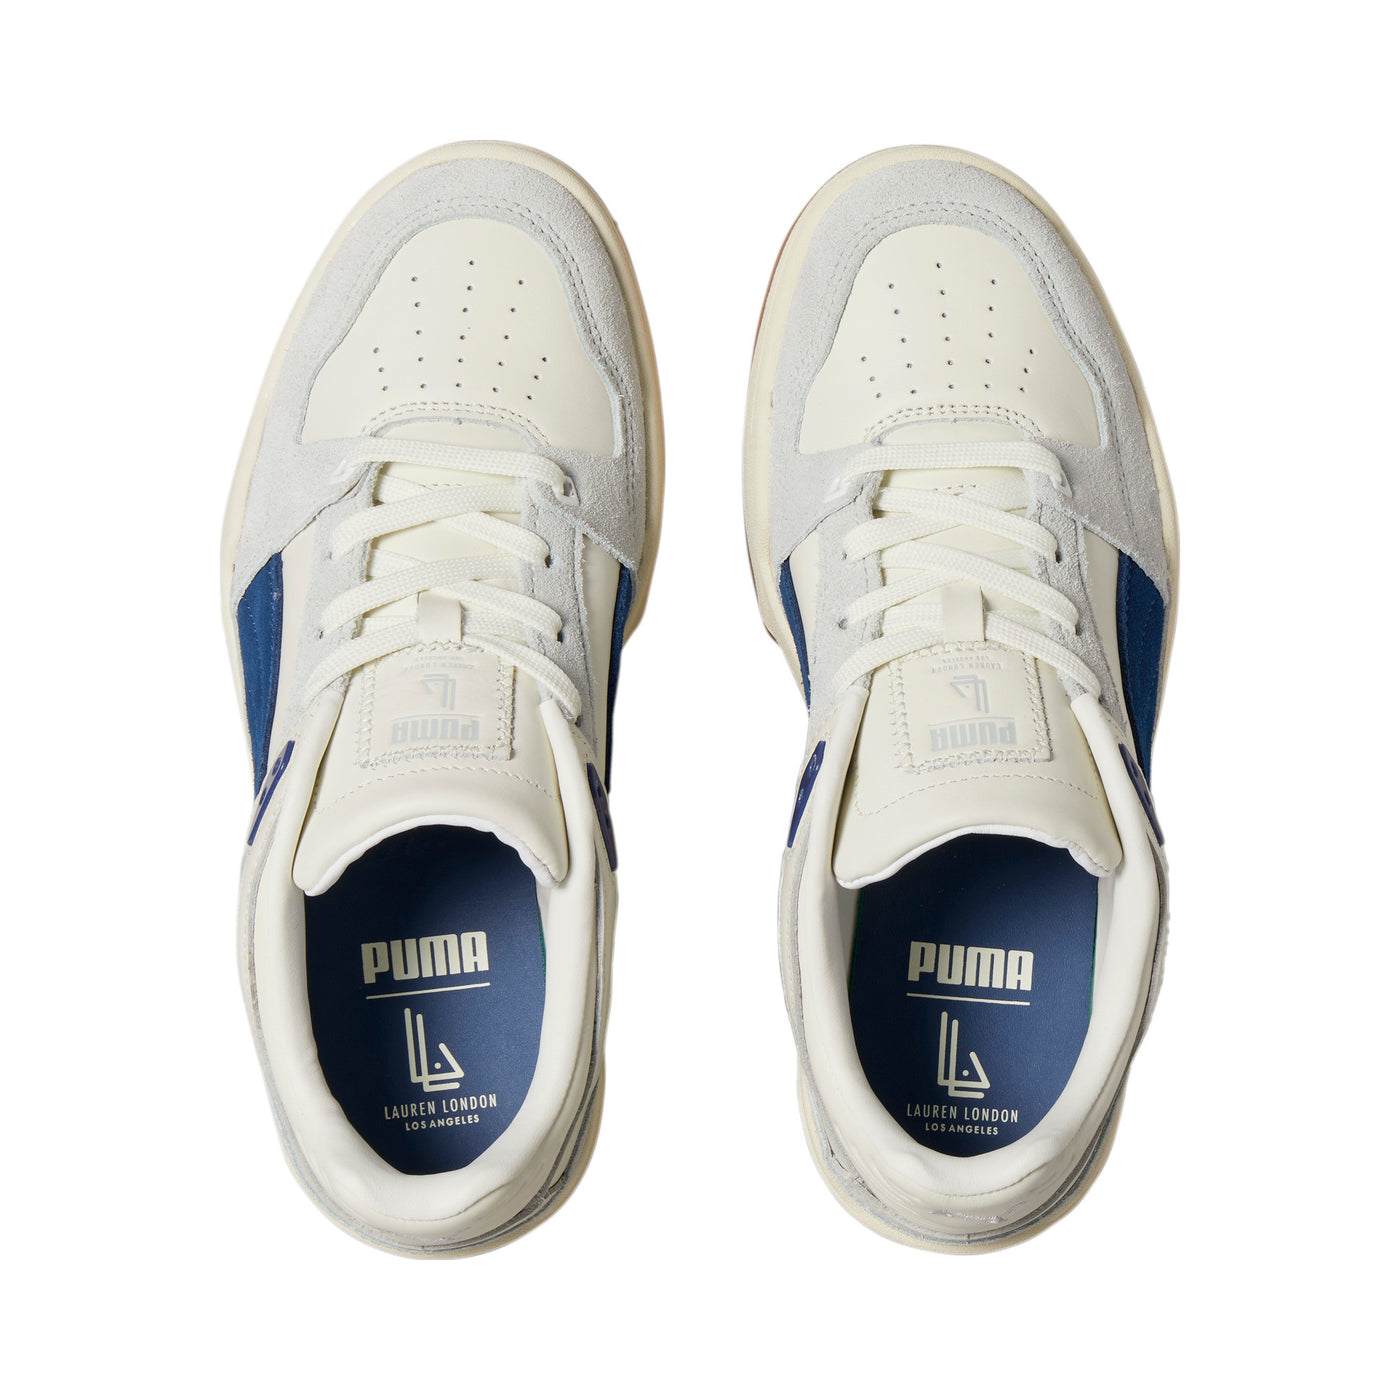 PUMA x Lauren London Slipstream Women's Sneakers - White/Royal - Top